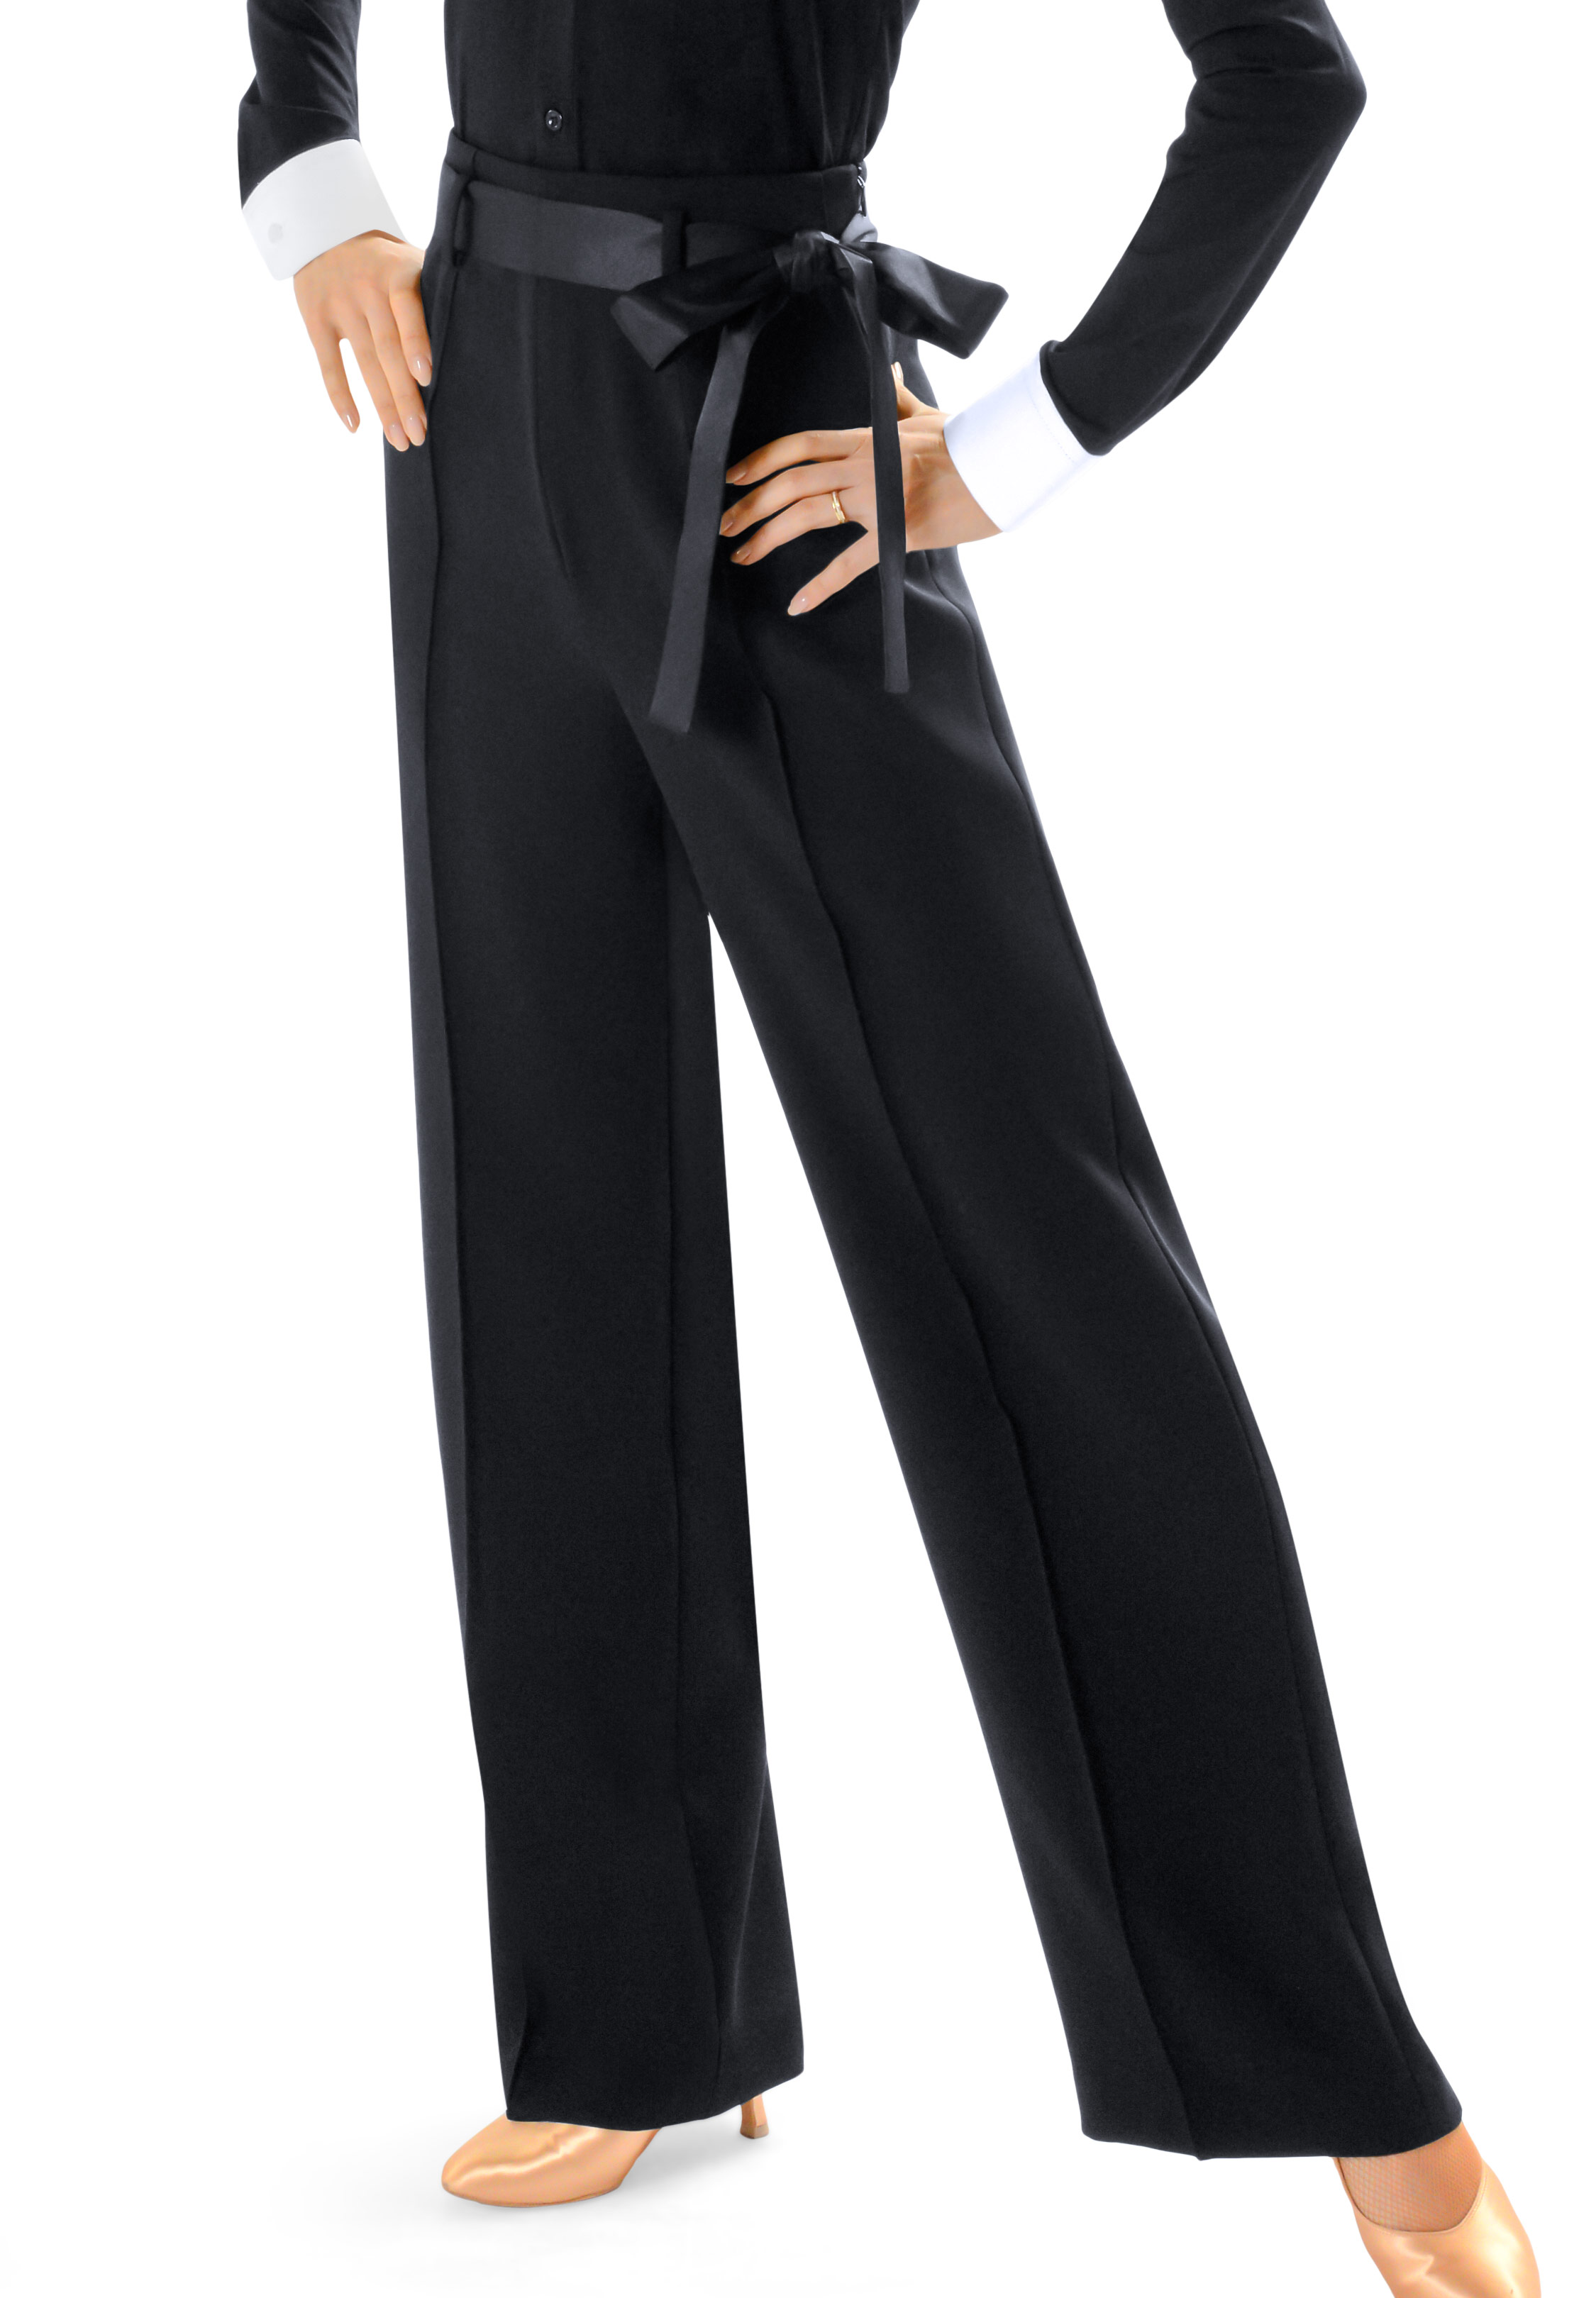 Long Pants Belly Dance Costume Cotton Dance Wear Yoga Practice Top+Trousers  | eBay